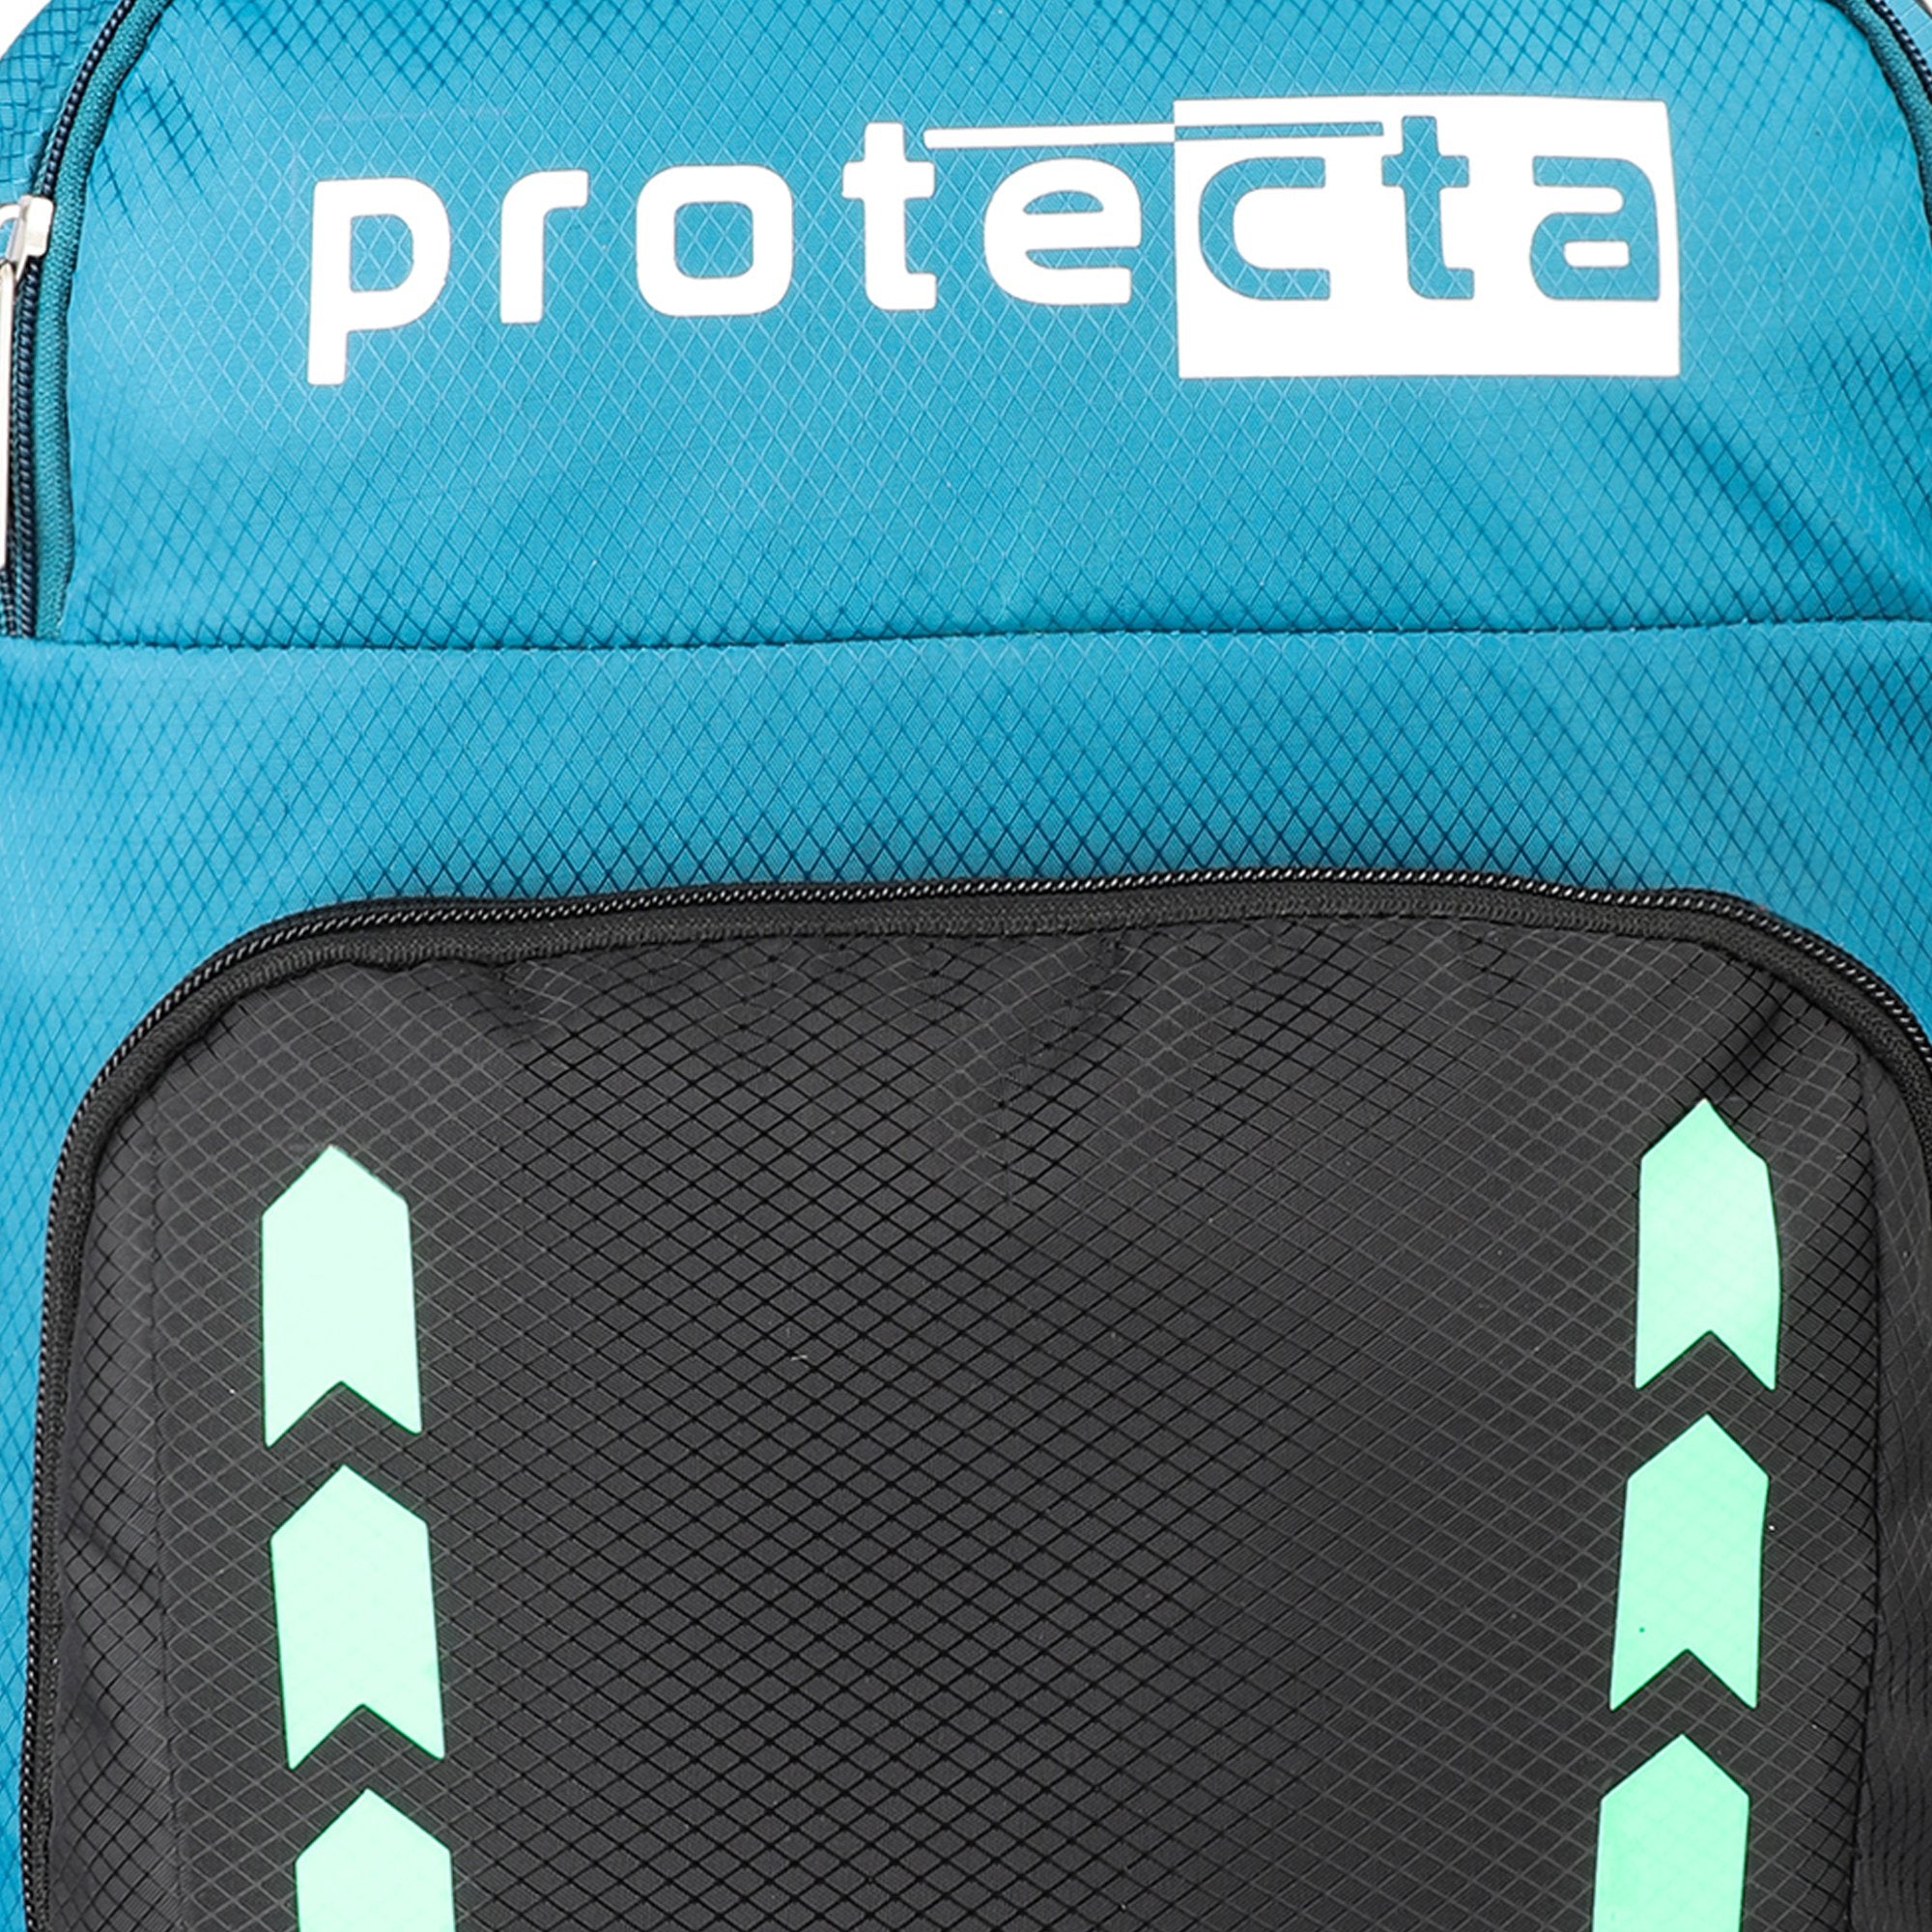 Black-Green | Protecta Bolt Laptop Backpack-6